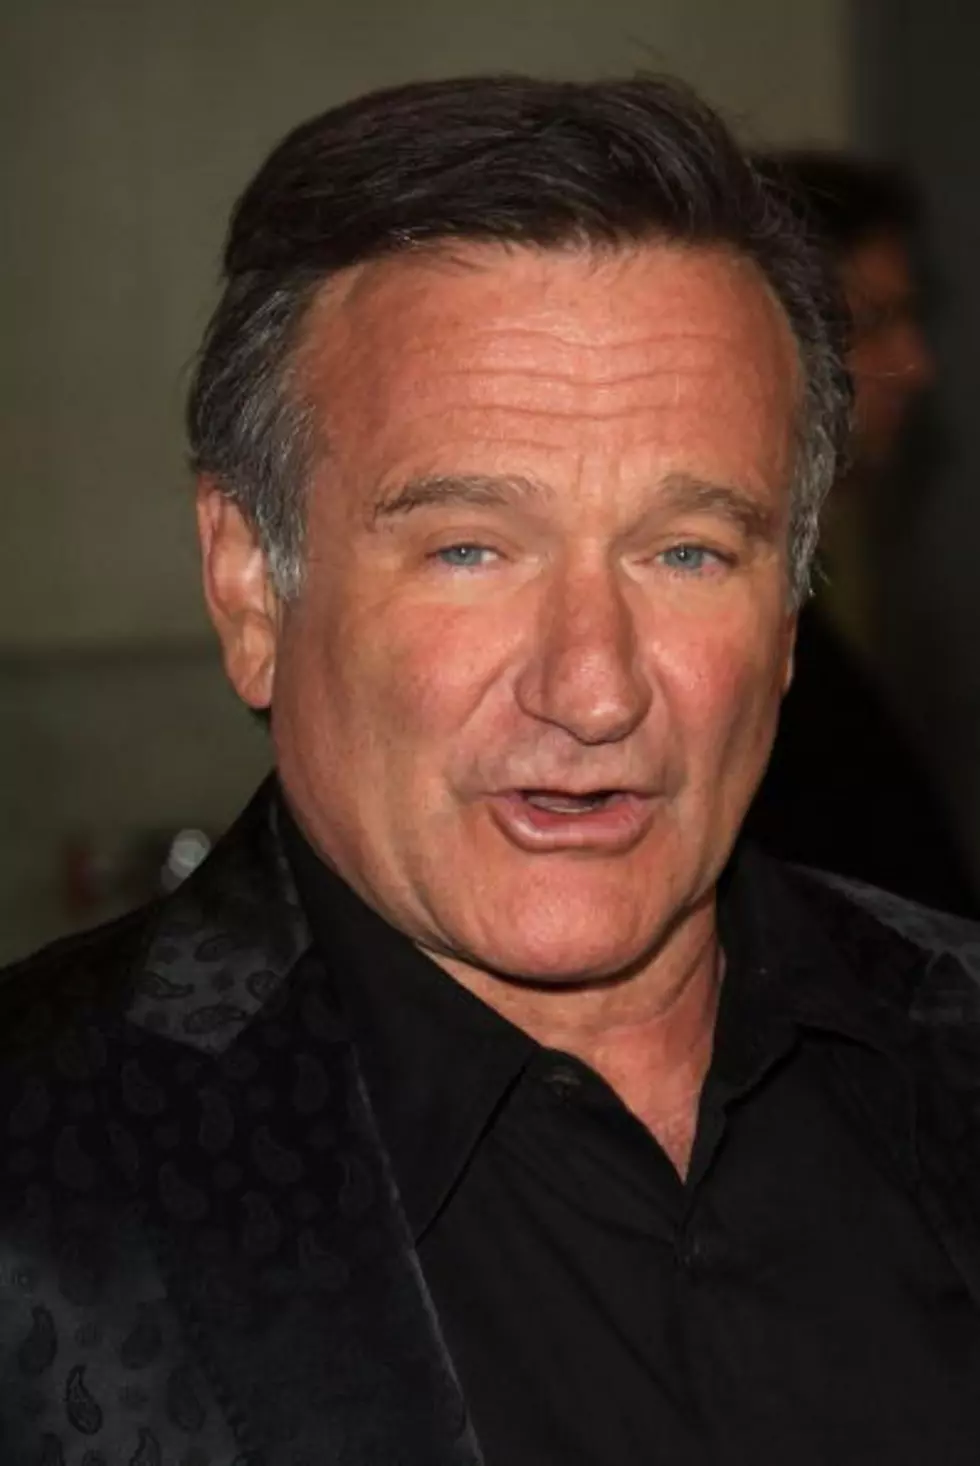 Robin Williams Impersonator Nails It! [Video]